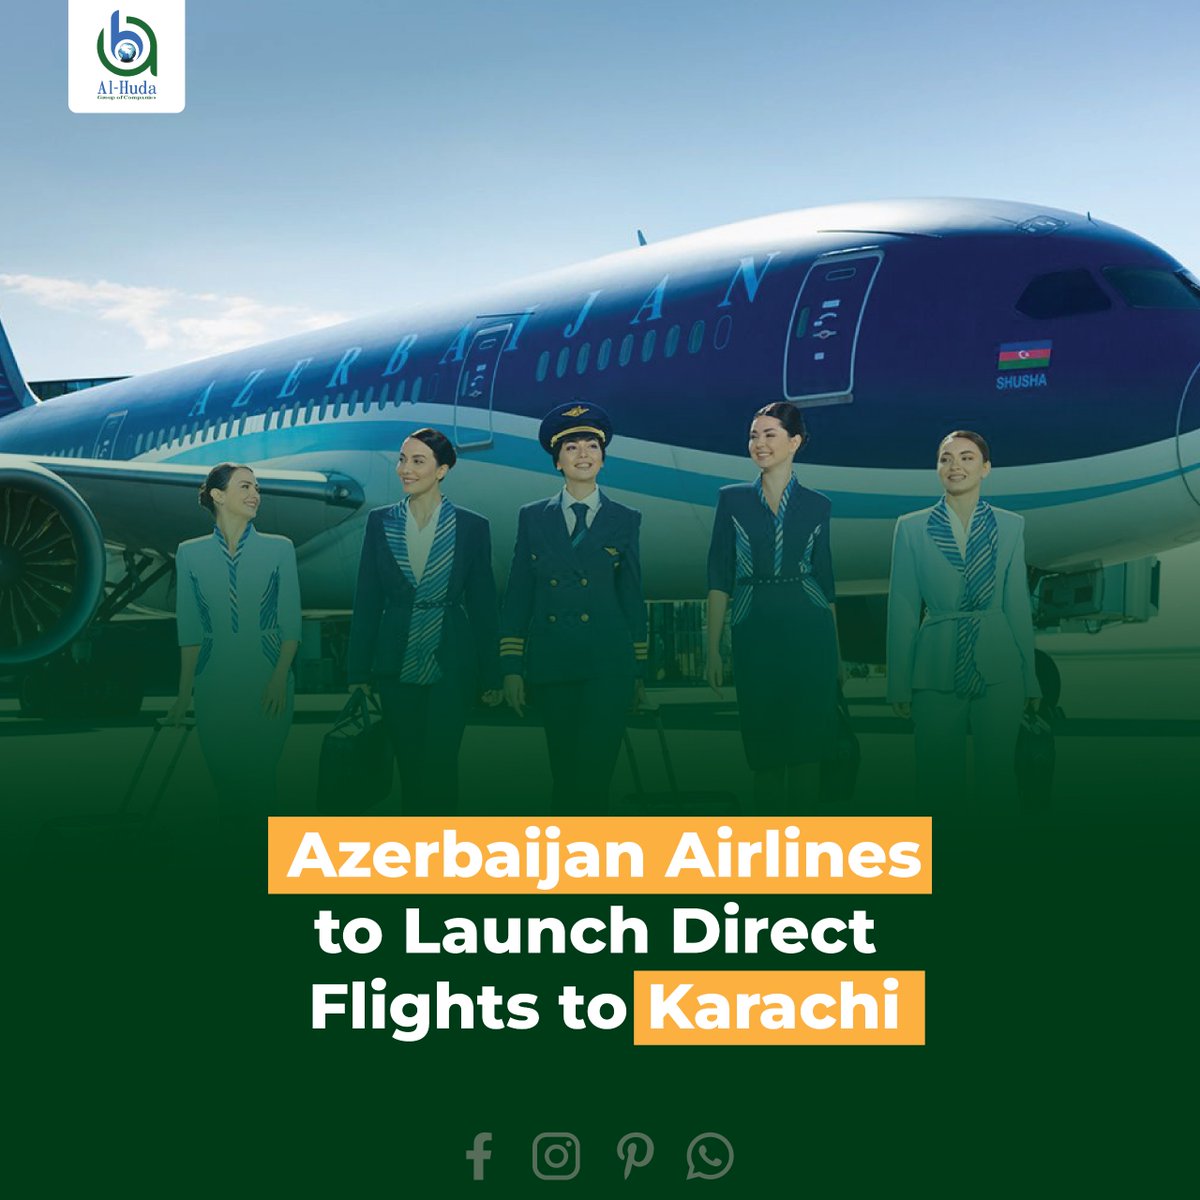 '𝗔𝘇𝗲𝗿𝗯𝗮𝗶𝗷𝗮𝗻 𝗔𝗶𝗿𝗹𝗶𝗻𝗲𝘀 to launch 𝗱𝗶𝗿𝗲𝗰𝘁 𝗳𝗹𝗶𝗴𝗵𝘁𝘀 to 𝗞𝗮𝗿𝗮𝗰𝗵𝗶'✈
✅'Stay tuned with 𝗔𝗹𝗵𝘂𝗱𝗮 𝗚𝗿𝗼𝘂𝗽 for updates' 🧳
#flightbooking #flights #azerbaijan #azerbaijantravel #AzerbaijanAirlines #DirectFlight #Karachi  #AlhudaInternational